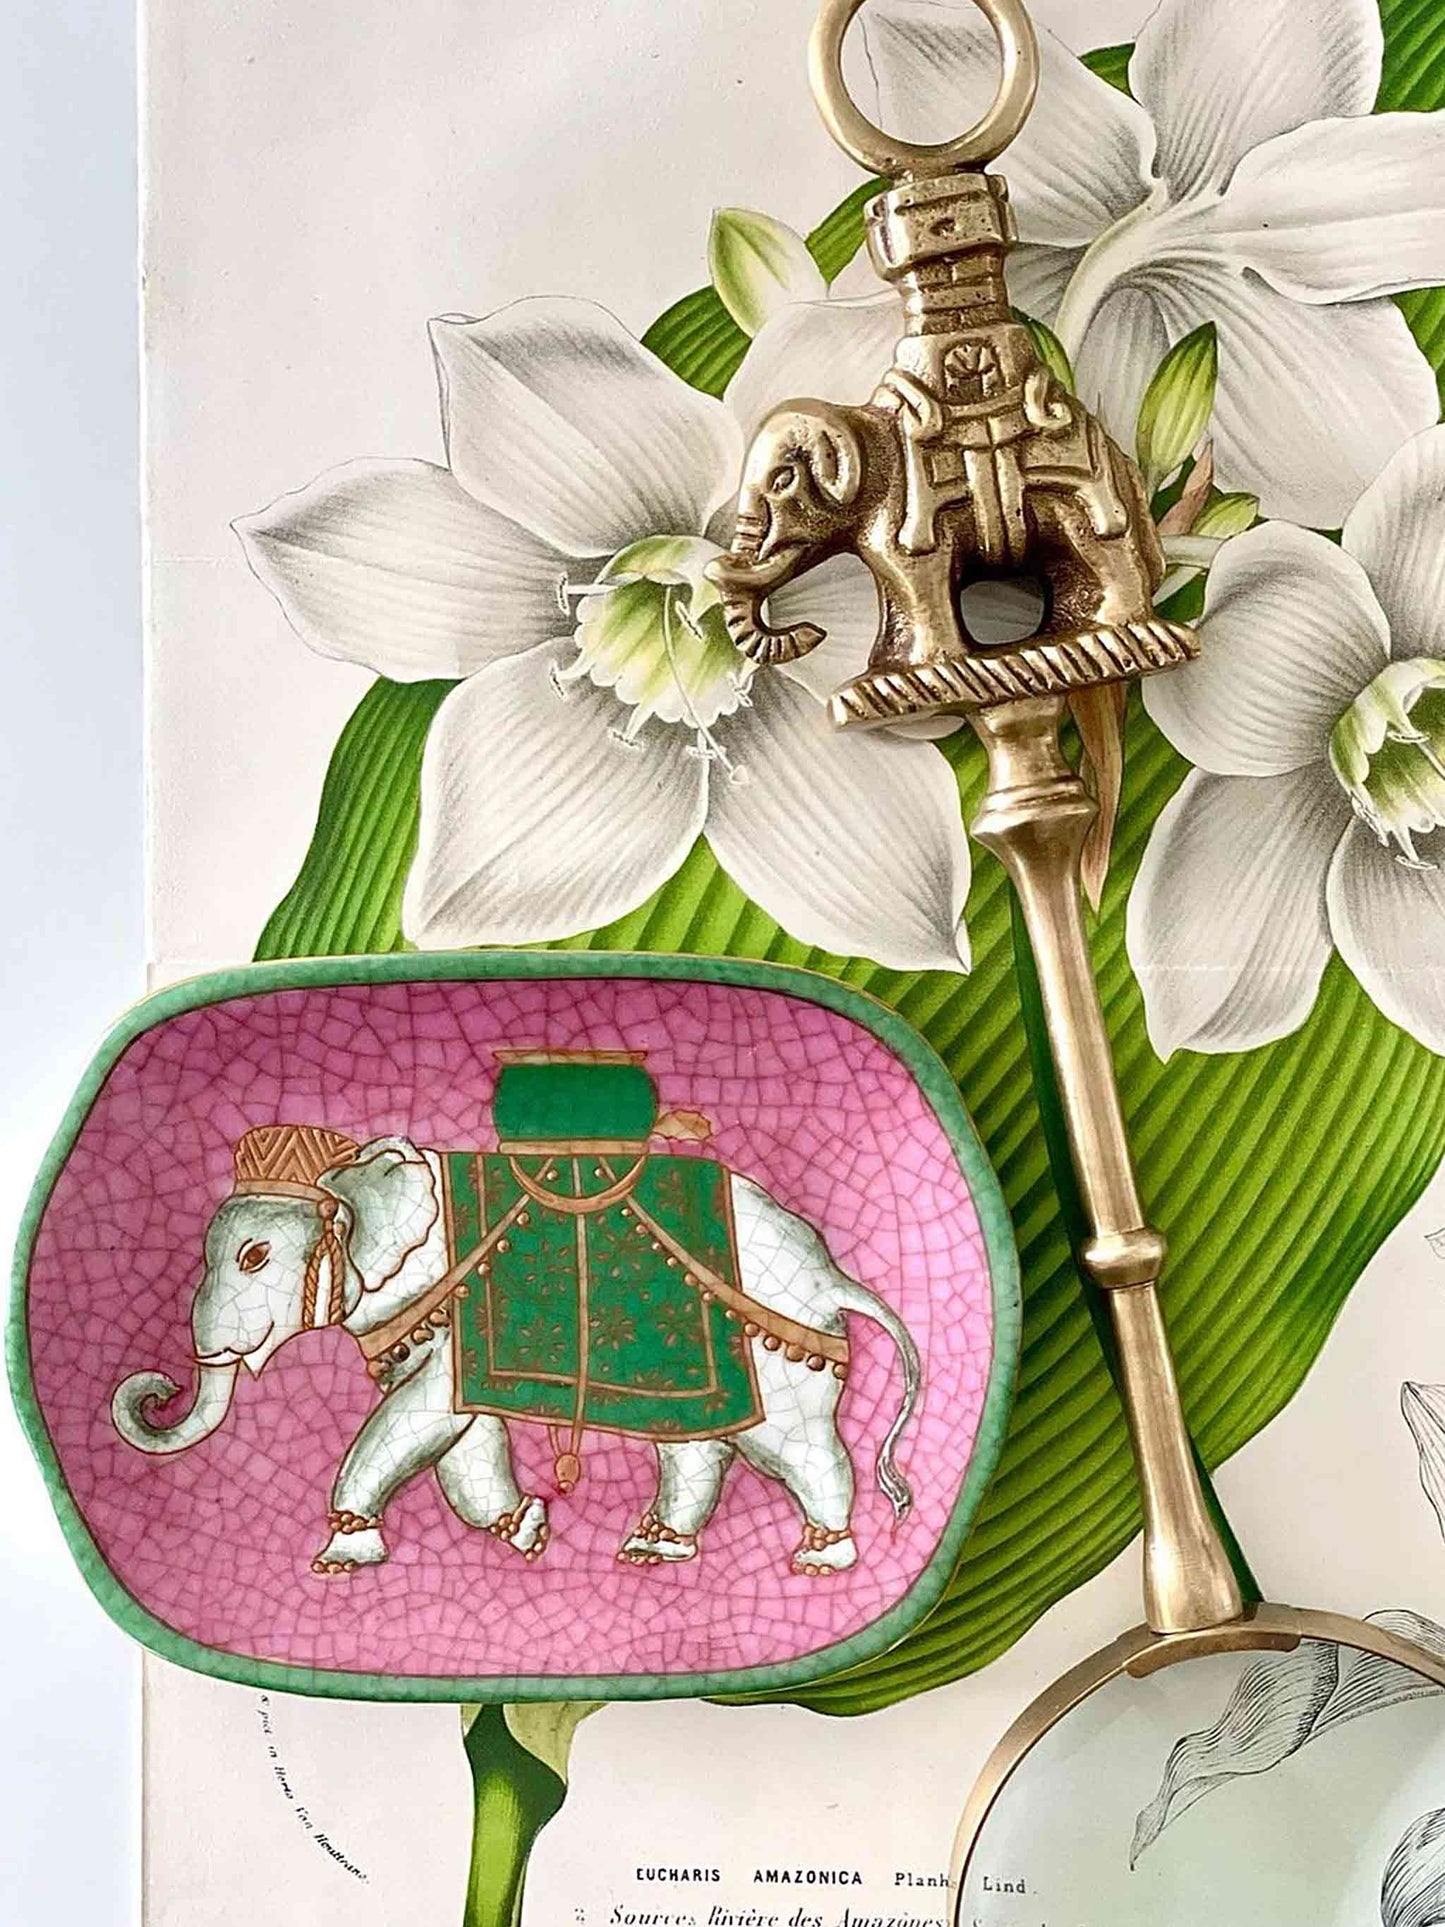 Porcelain Savon Soap/Trinket Dish Elephant Pink by C.A.M